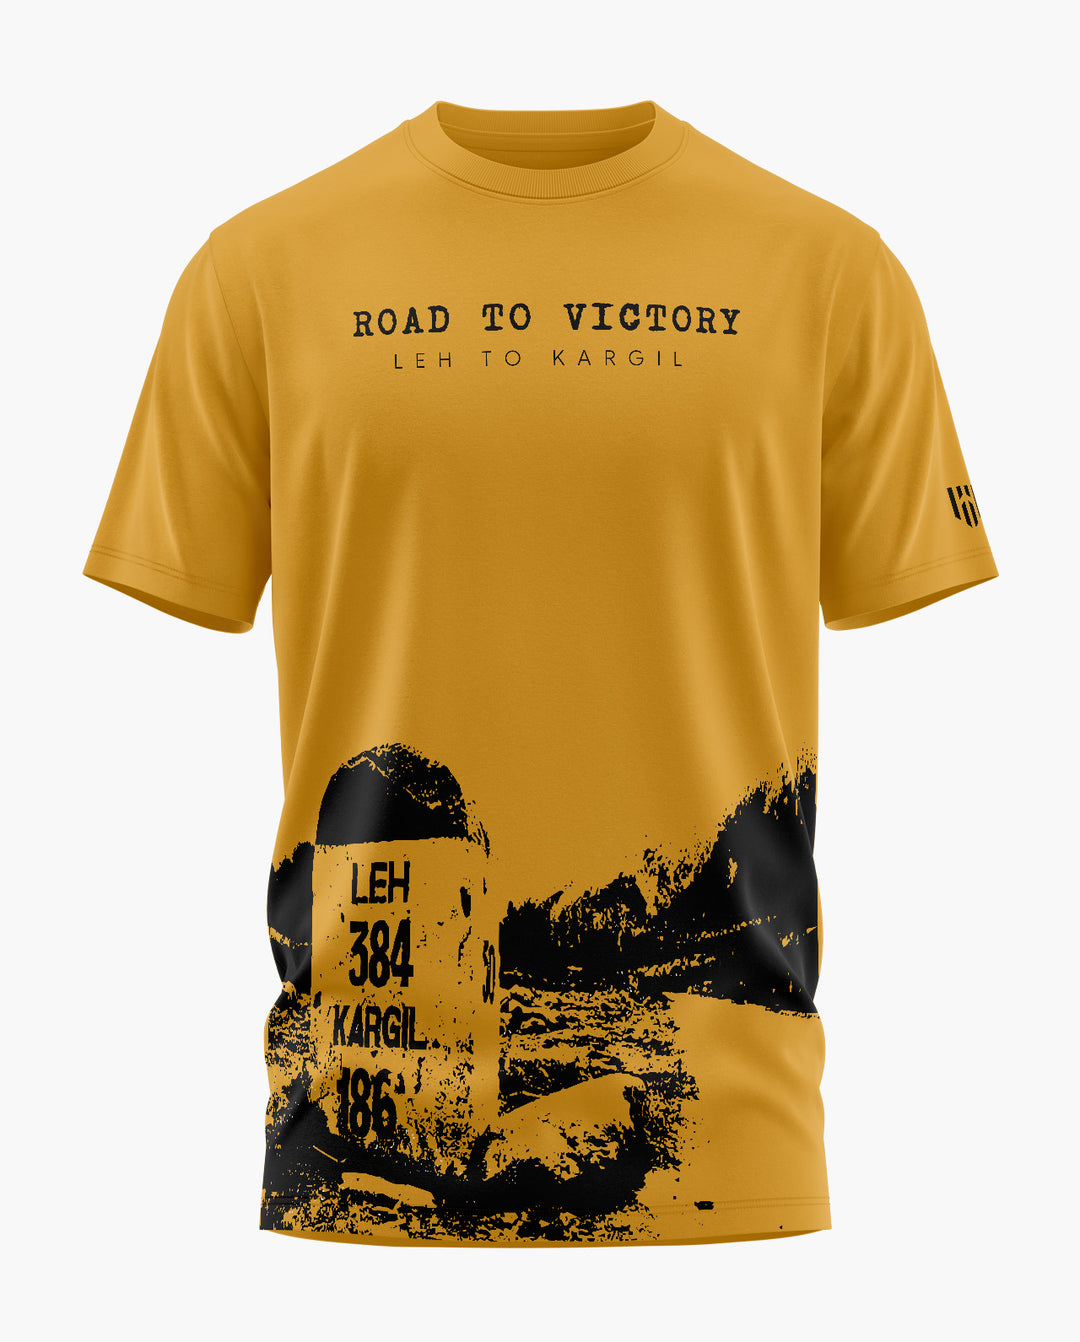 ROAD TO VICTORY KARGIL T-Shirt